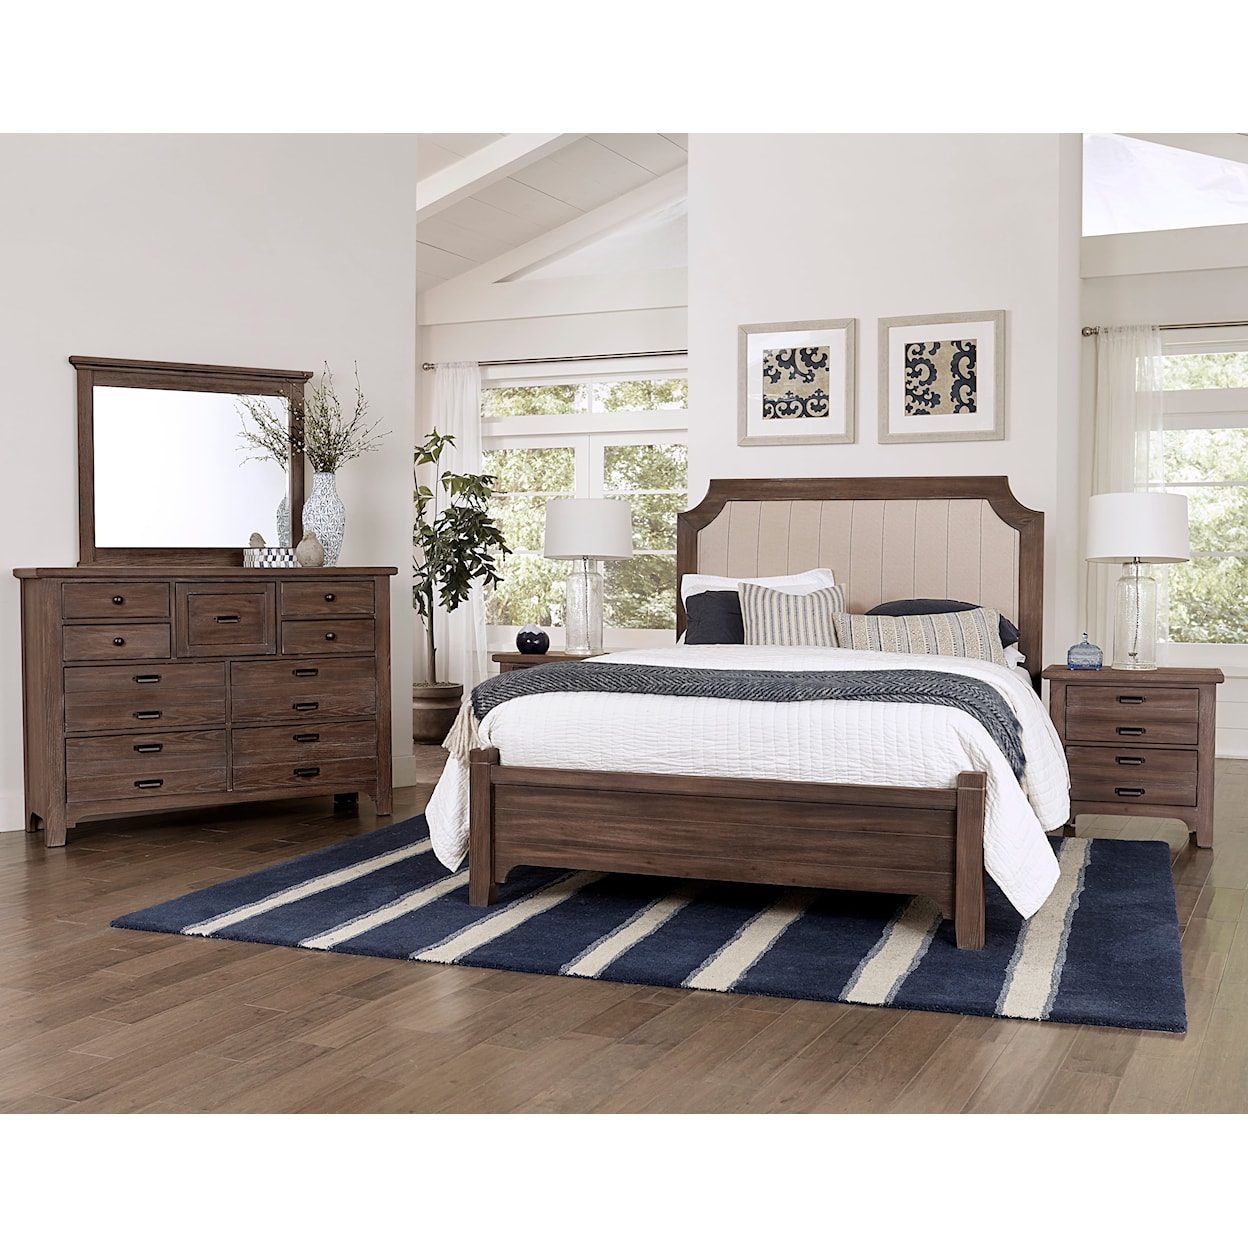 Laurel Mercantile Co. Bungalow 4-Piece Bedroom Set